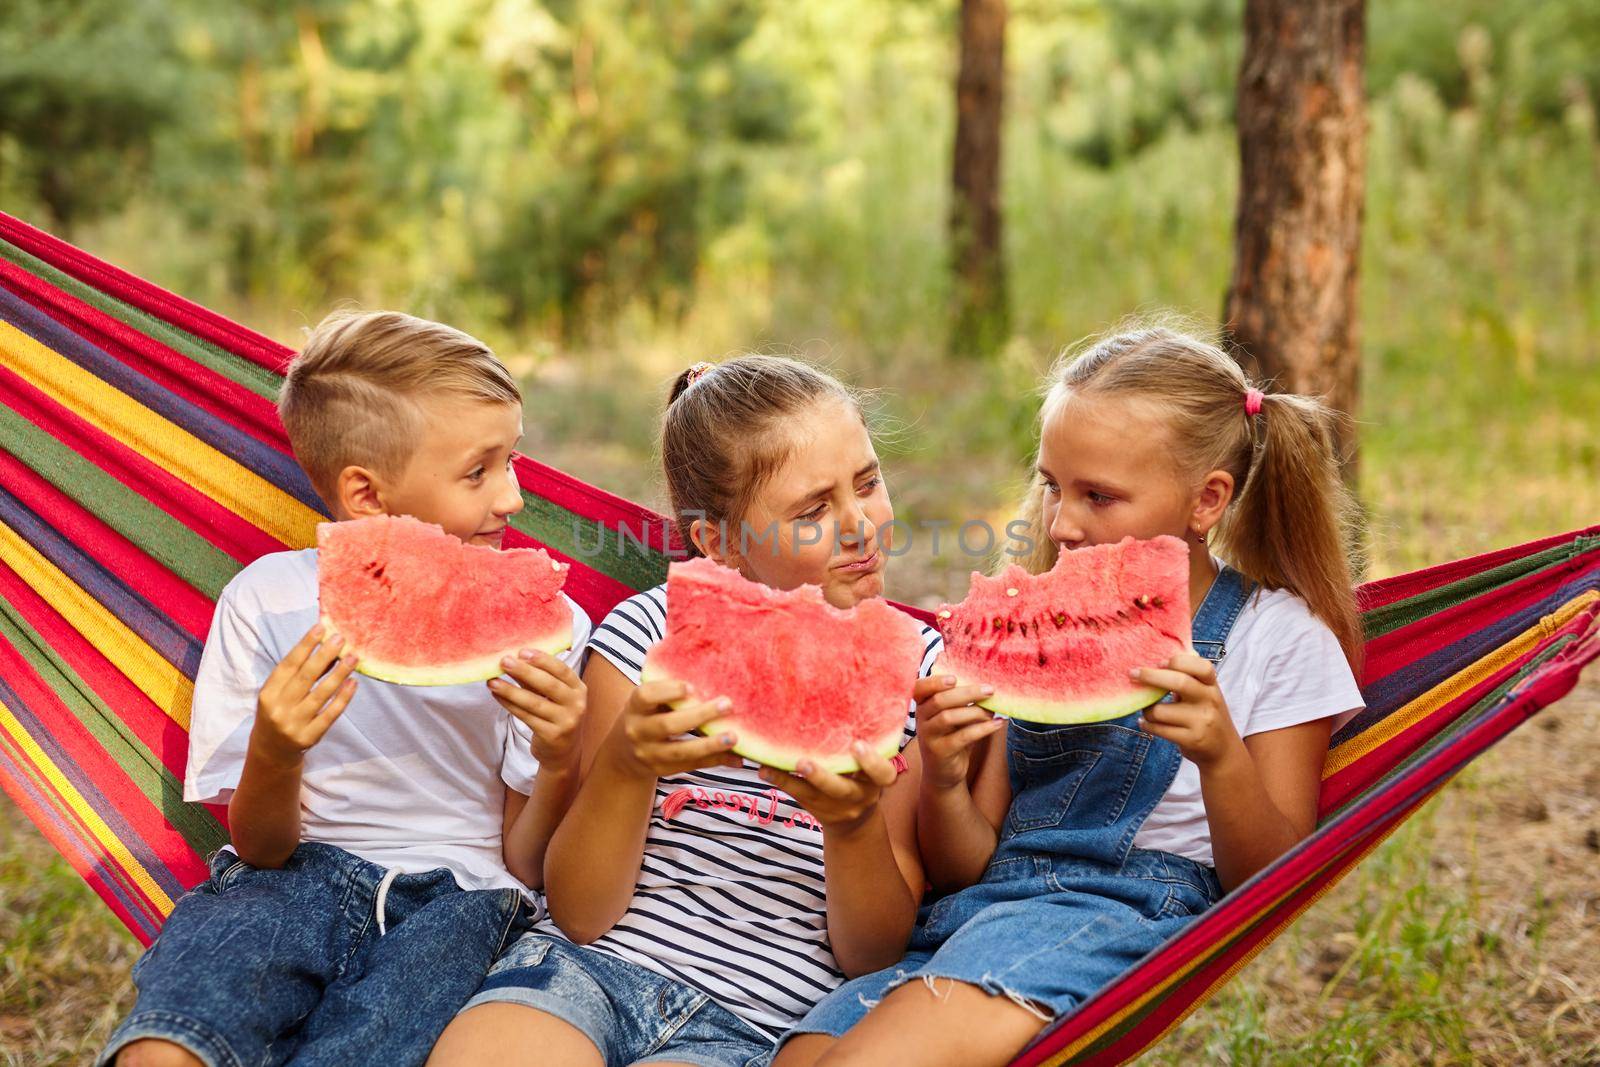 children eat watermelon and joke, outdoor, sitting on a colorful hammock. by InnaVlasova